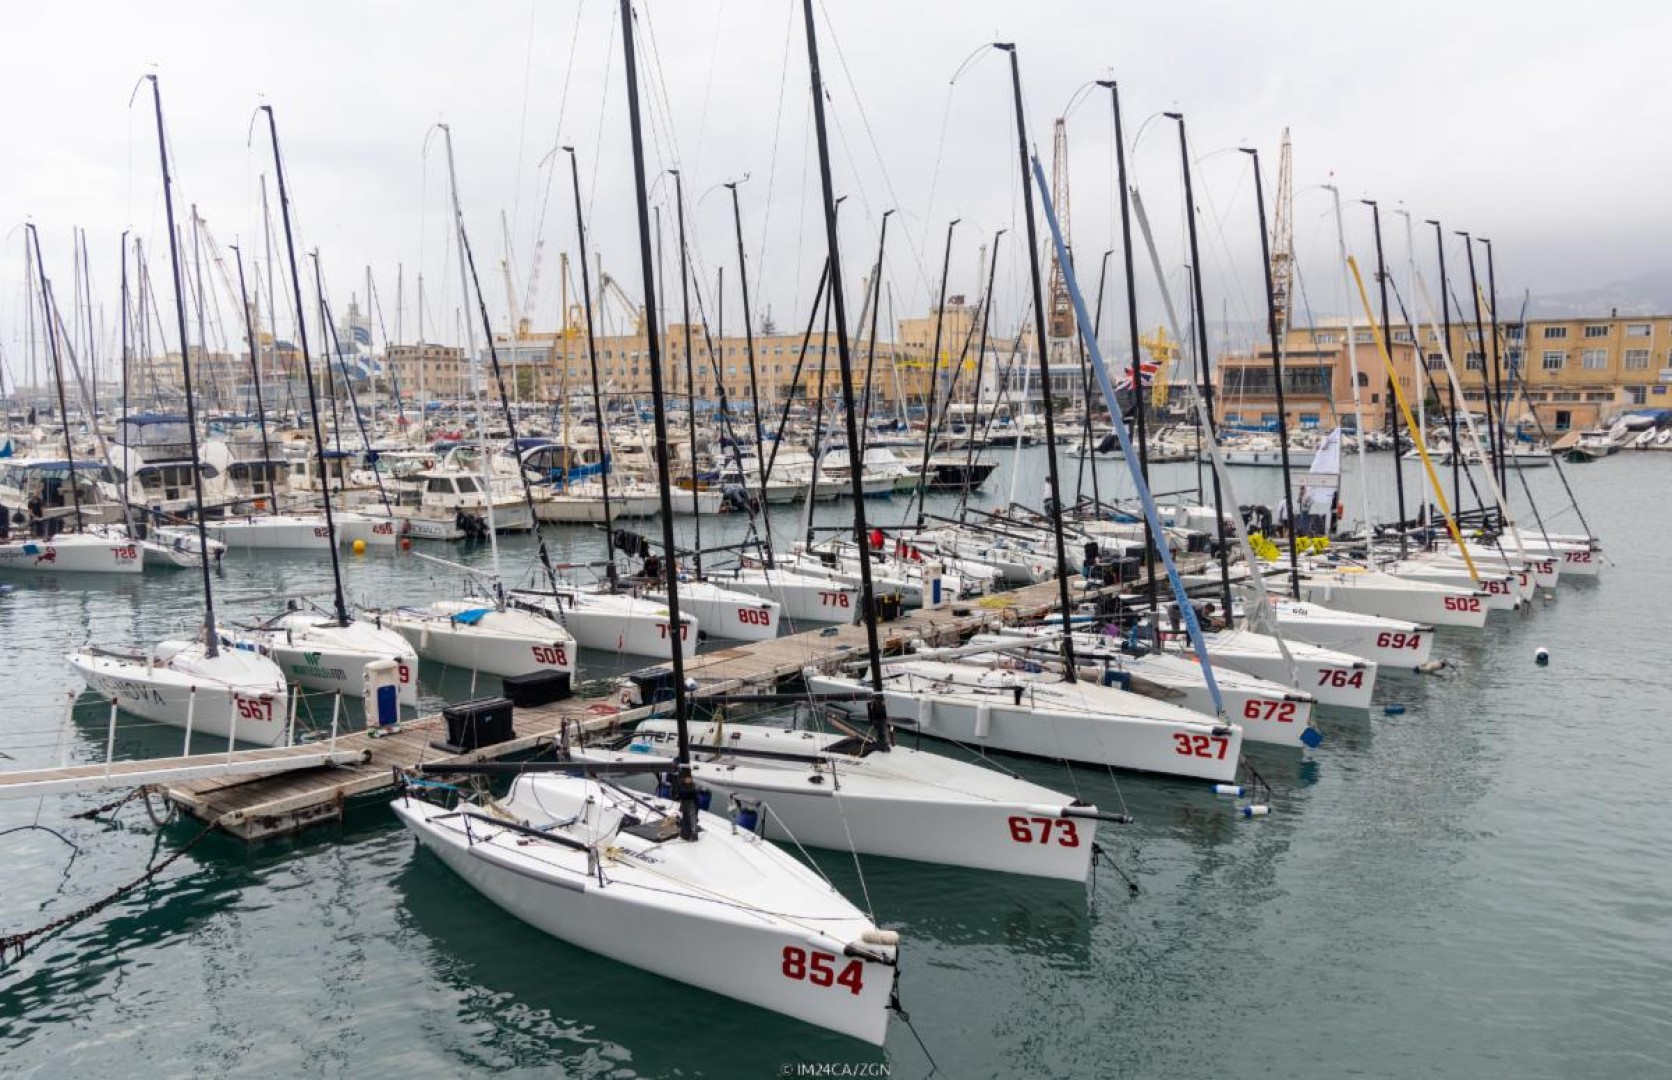 Melges 24 fleet ready in YCI Genova for the Melges 24 Europeans 2022 - Photo © IM24CA/Zerogradinord